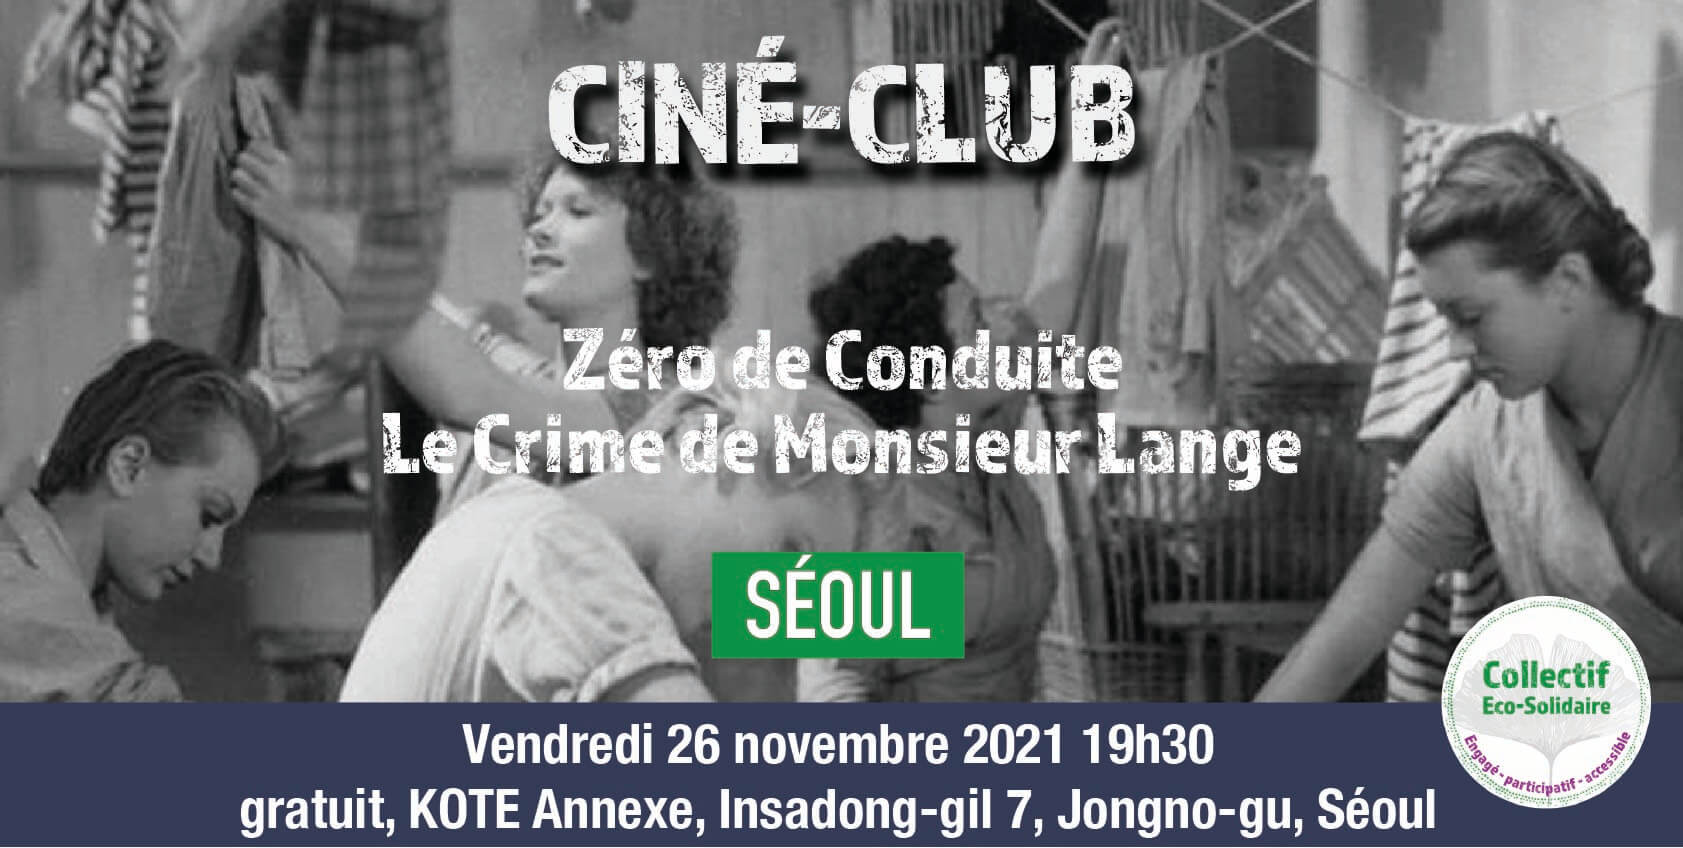 Ciné-club novembre 2021 | Collectif Eco-solidaire Corée Taïwan